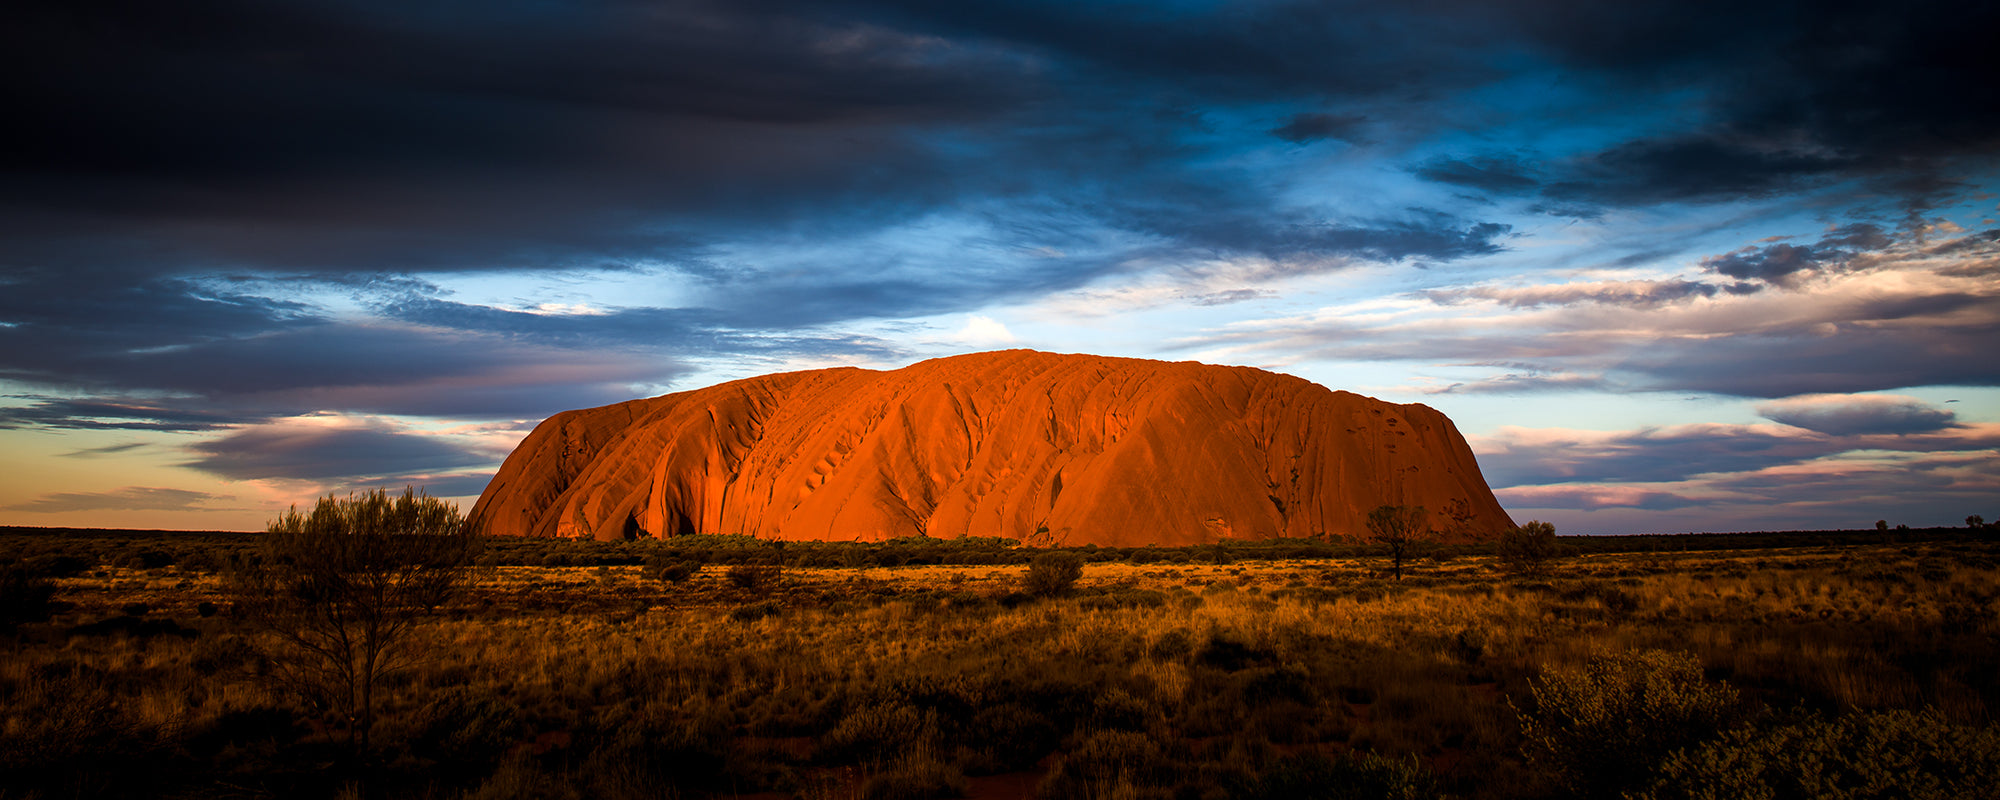 1324 Uluru-Kata Tjuta National Park